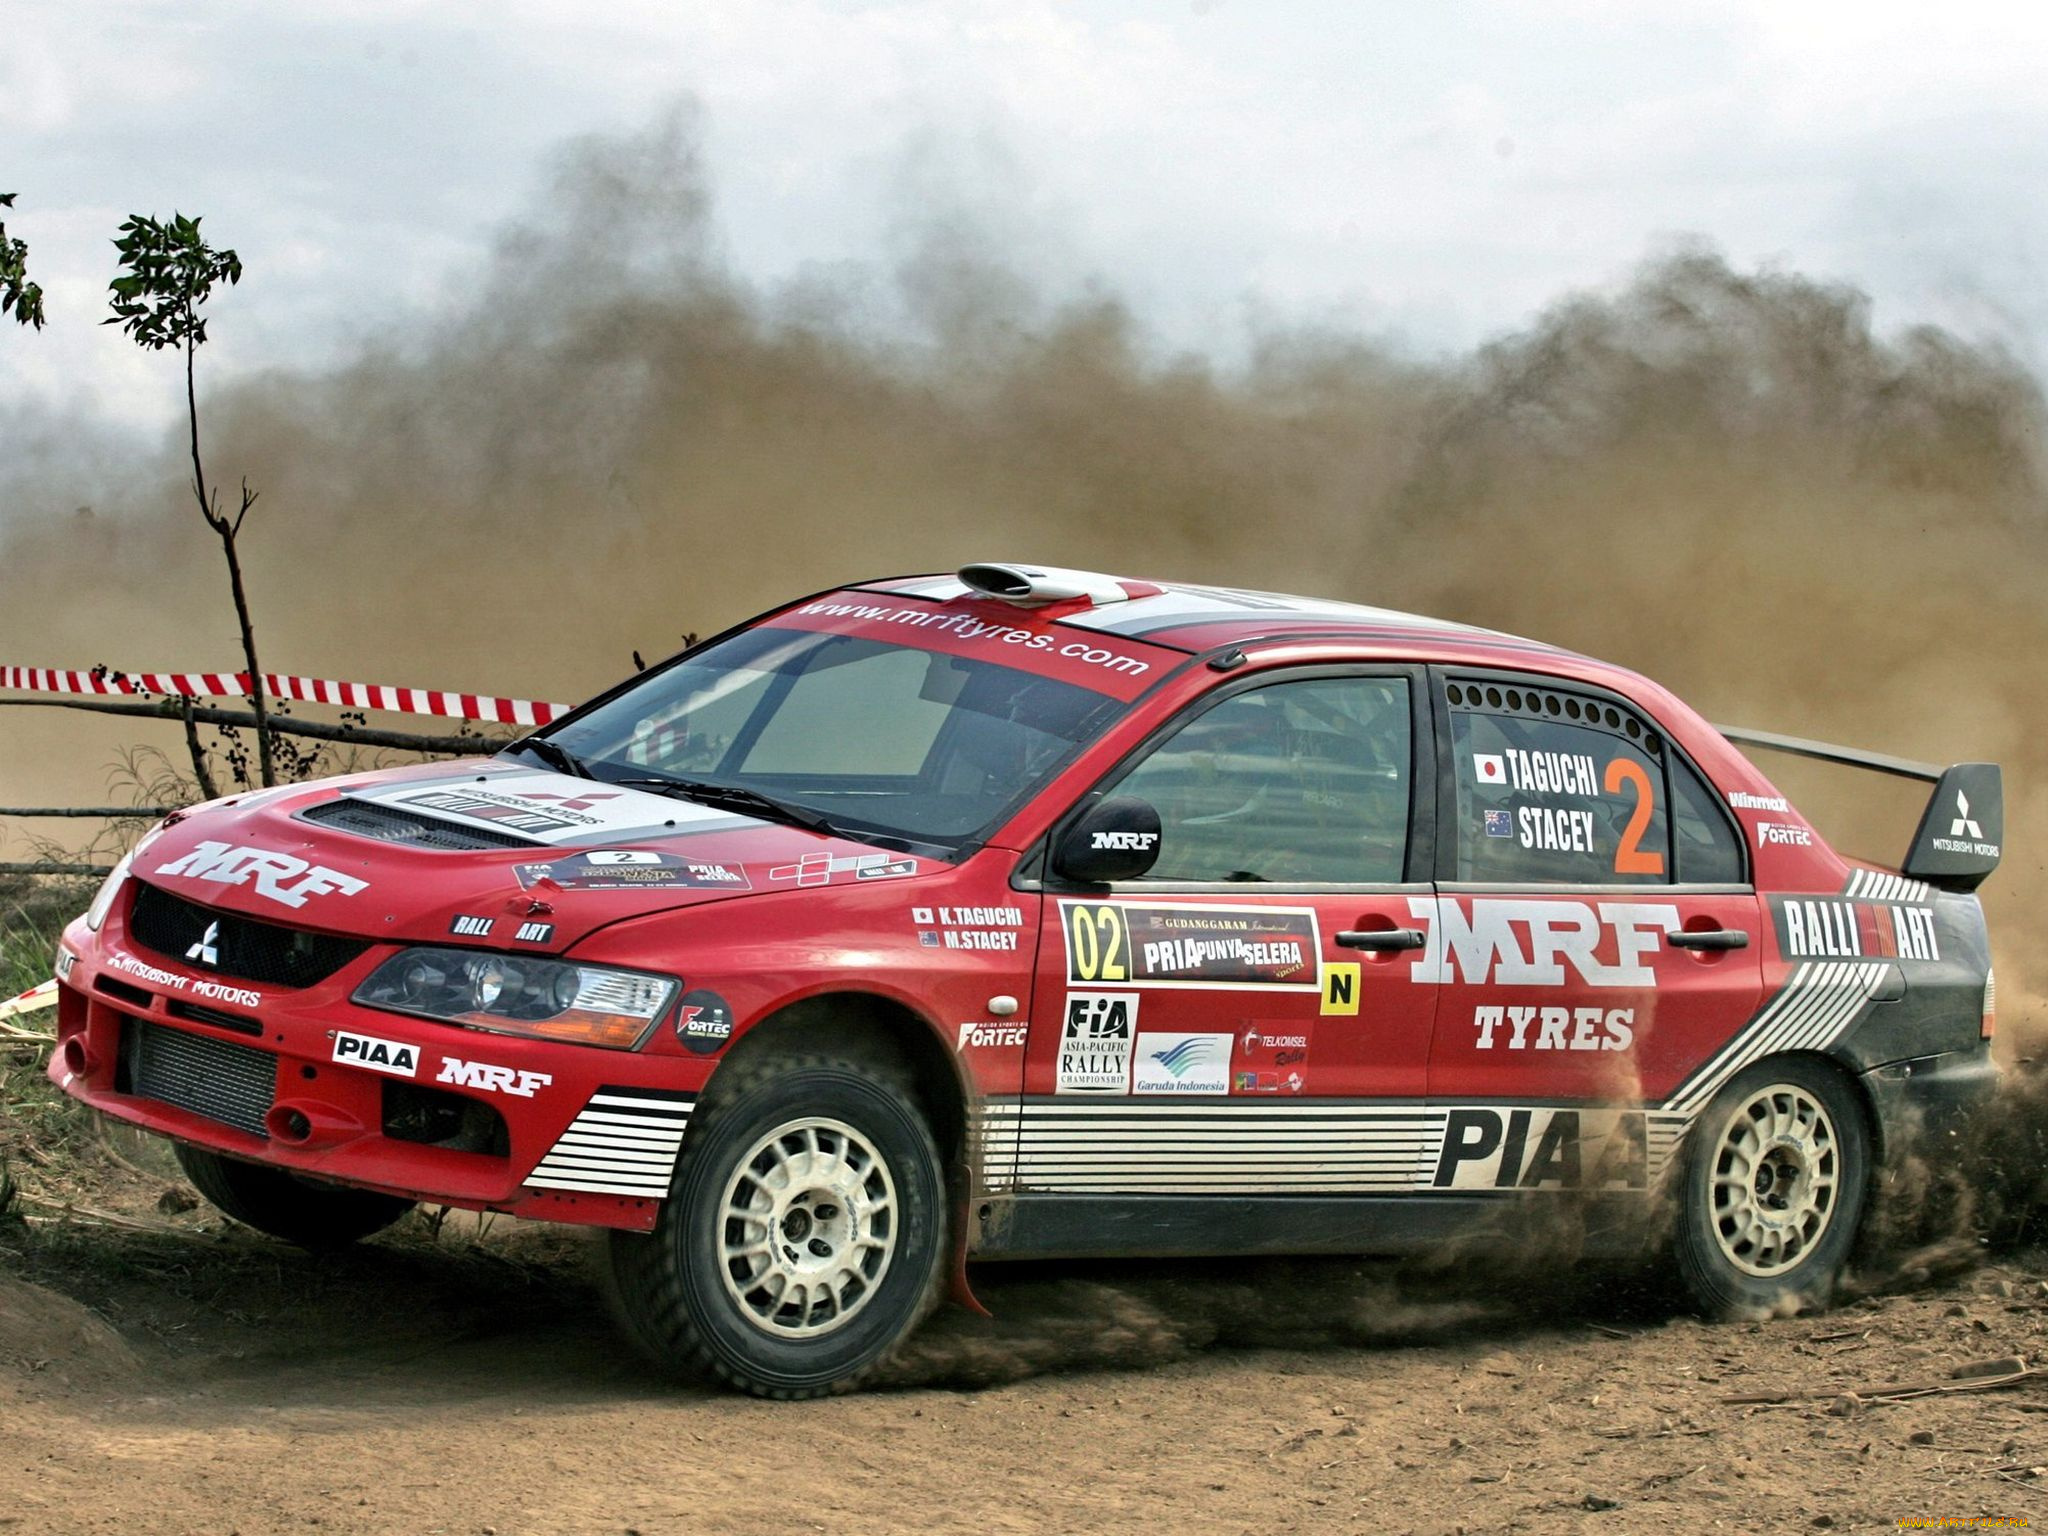 Ралли икс. Mitsubishi Lancer Evolution IX Rally. Mitsubishi Lancer Evolution ралли. Lancer EVO 9 Rally. Mitsubishi Evolution 9 ралли.